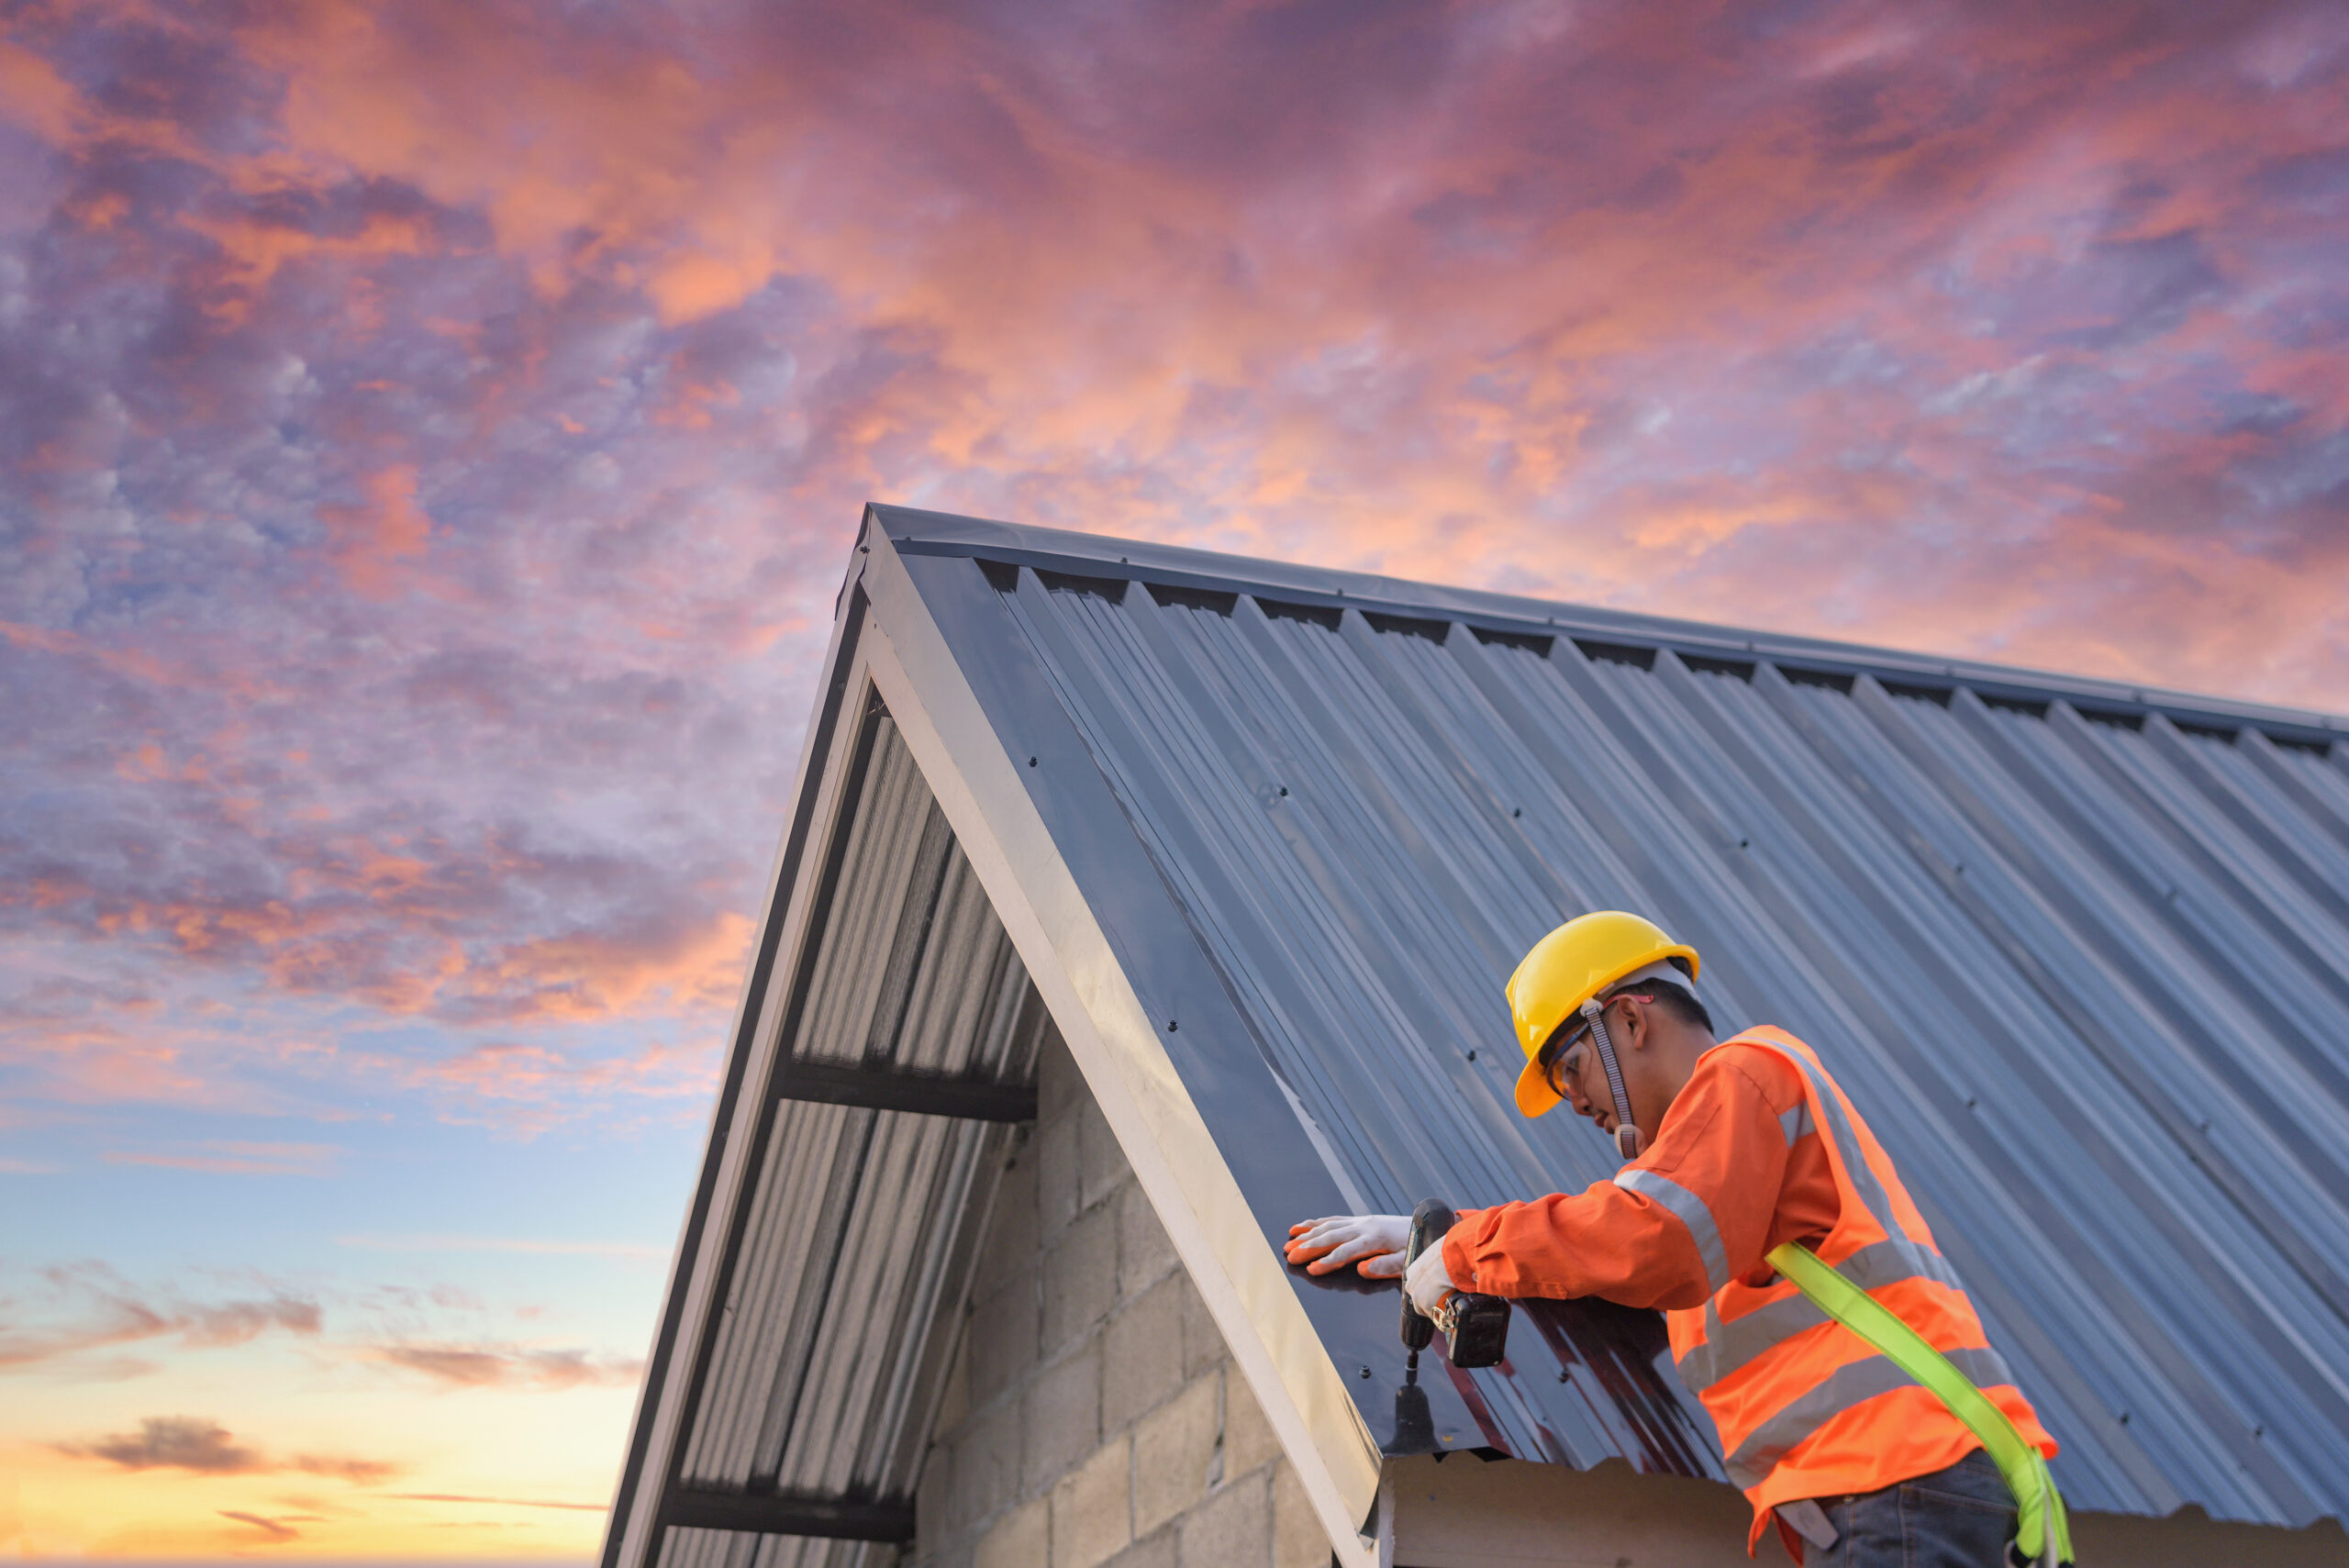 Roofer in hardhat and safety vest installs metal roof at sunset